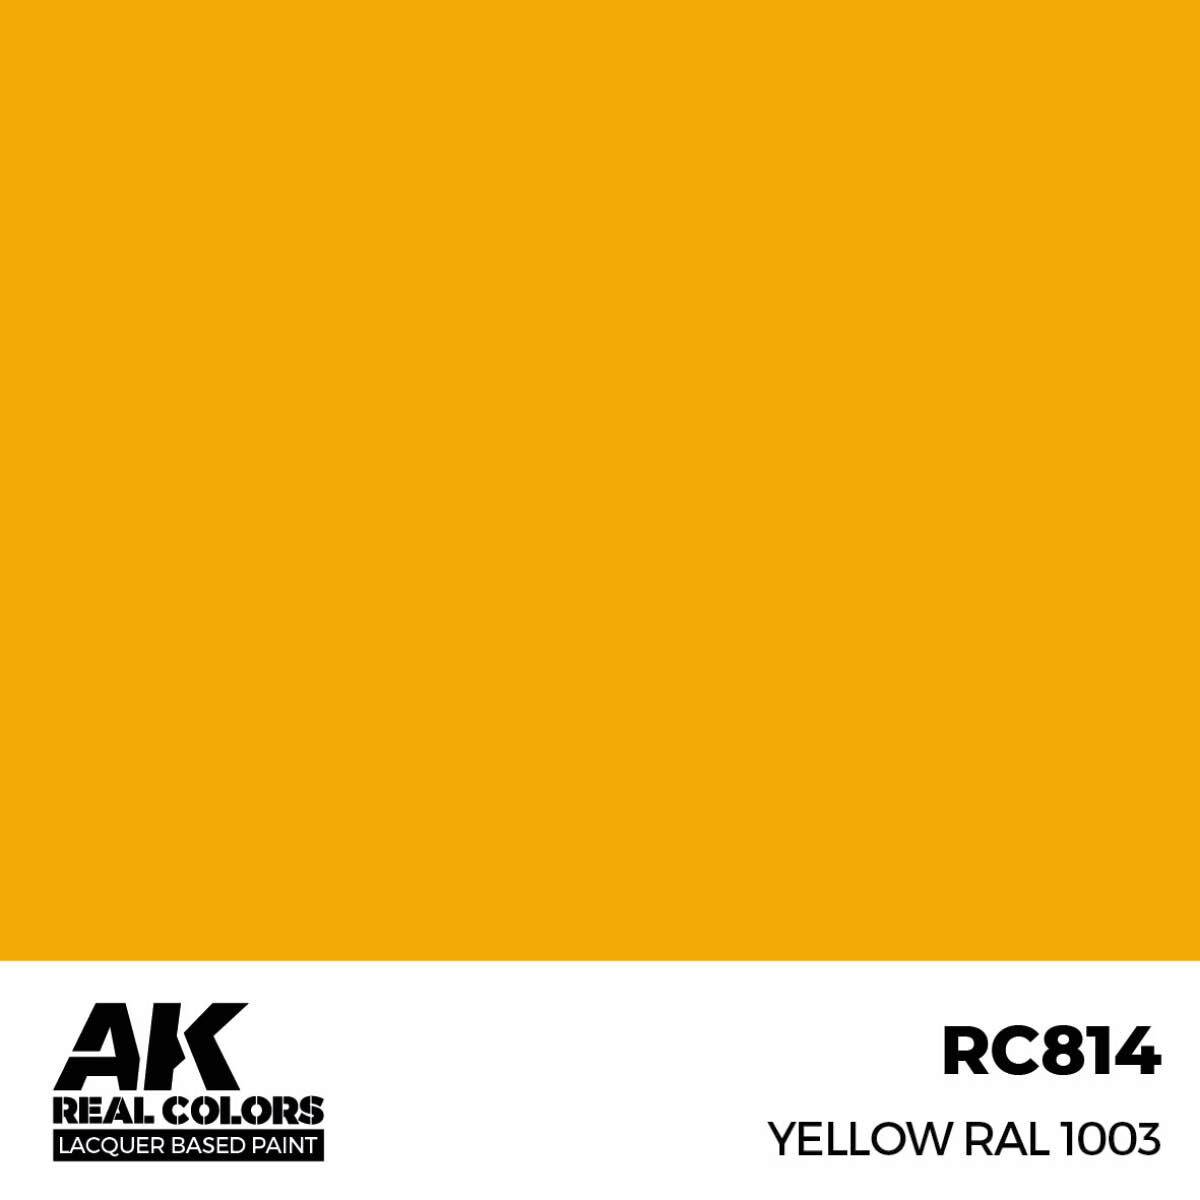 AK RC814 Real Colors Yellow RAL 1003 17 ml.